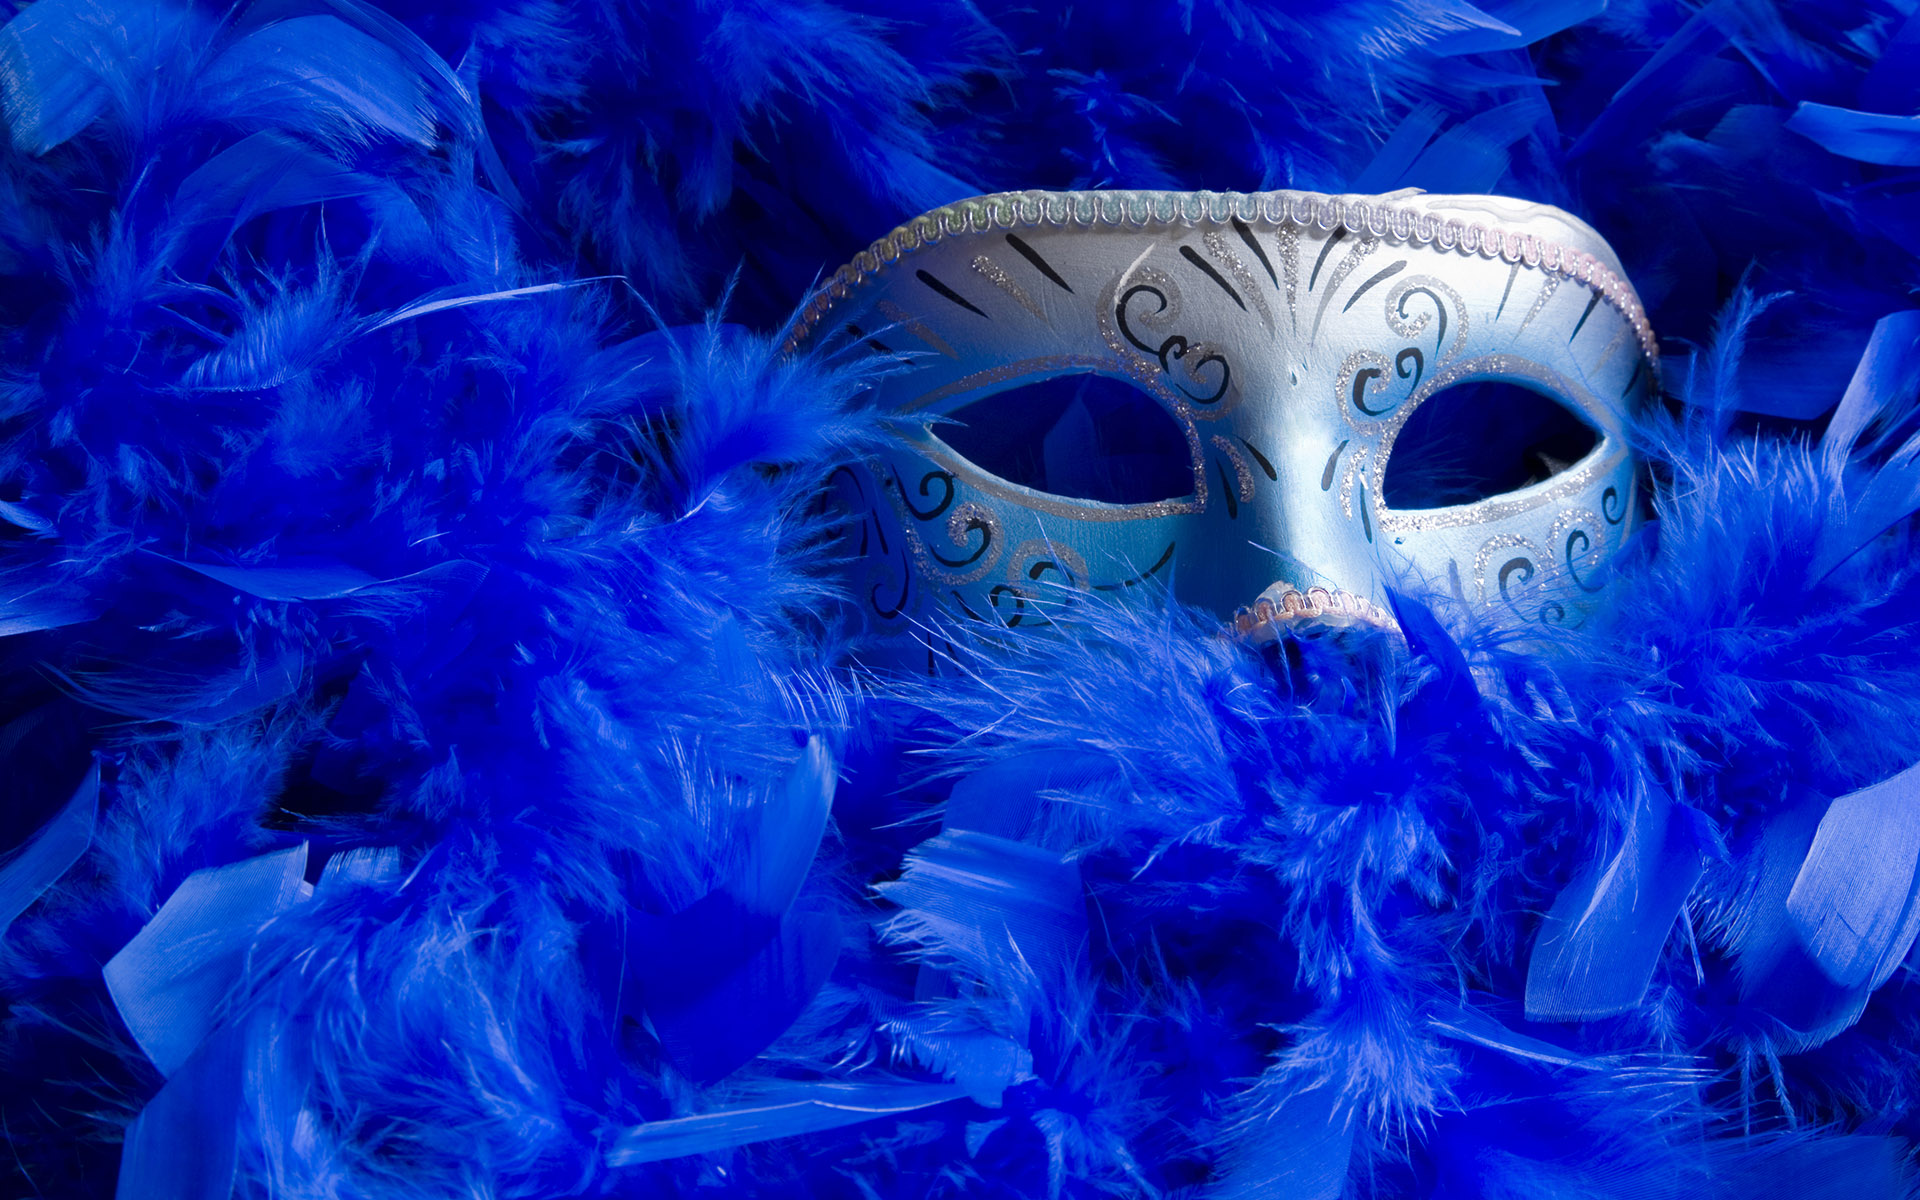 Venetian mask among bright blue feathers.